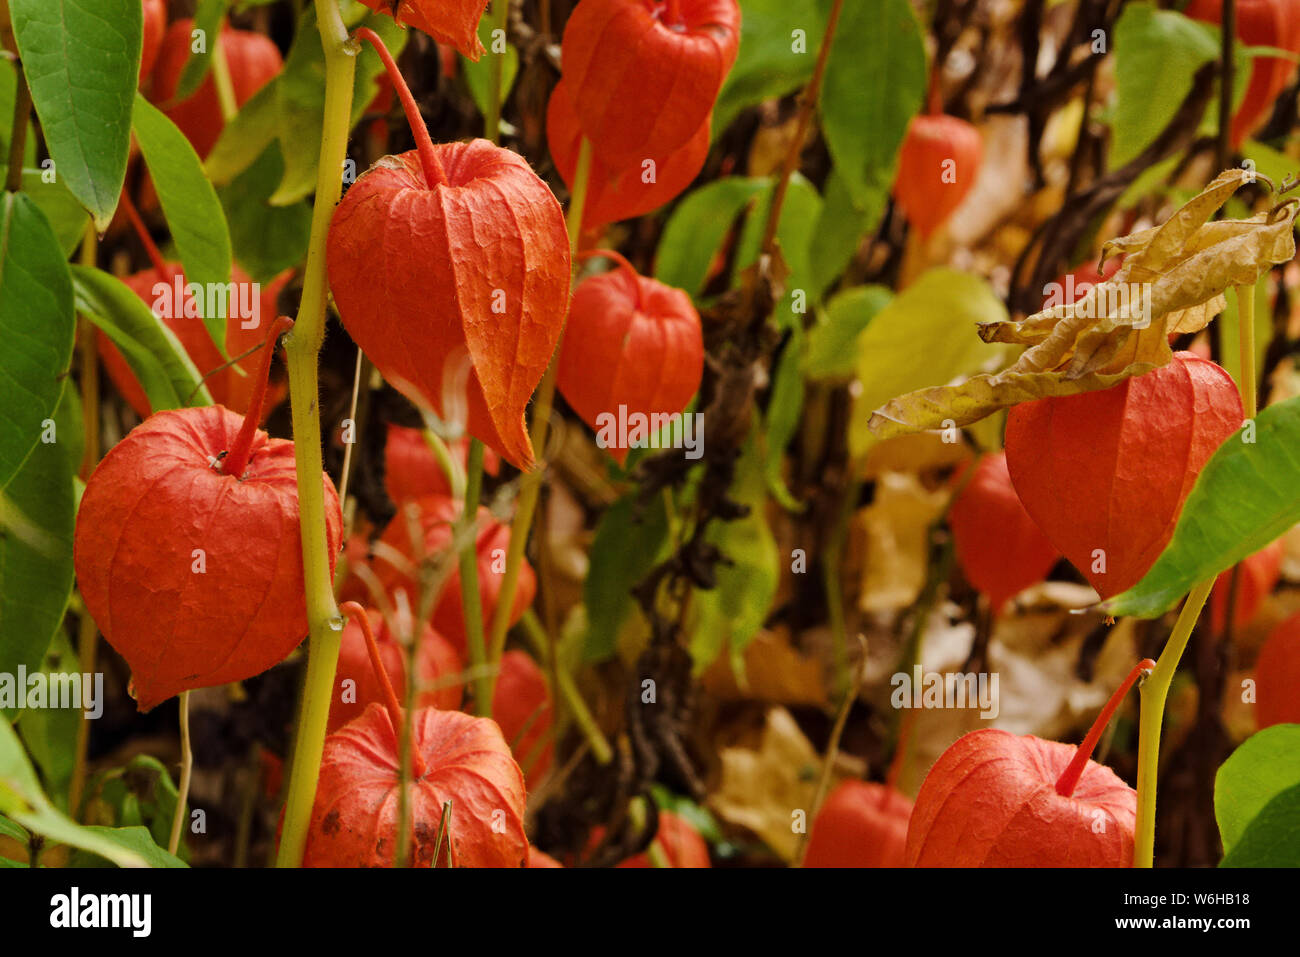 Autumn decorative plant Physalis alkekengi (also known as Chinese lantern, groundcherry or winter cherry) in garden Stock Photo